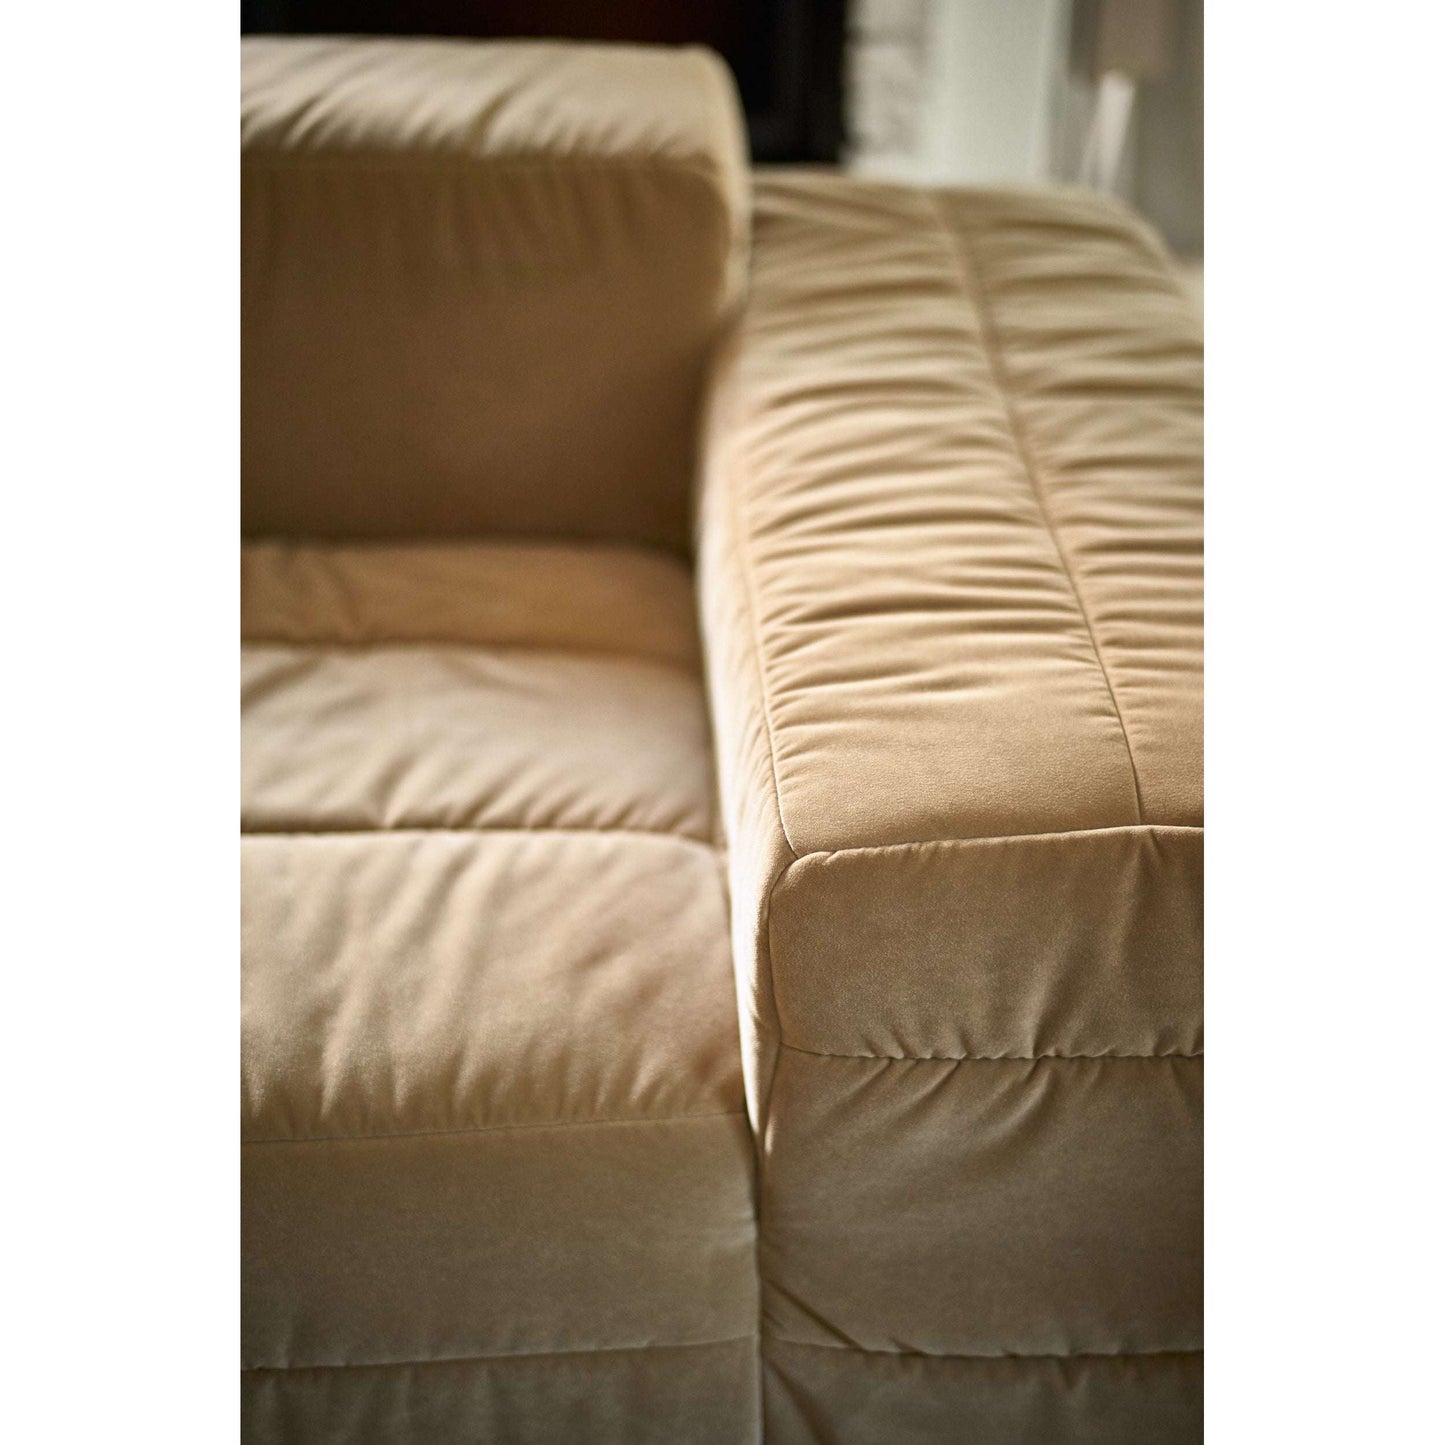 HKliving brut couch element rechts royal velvet cream